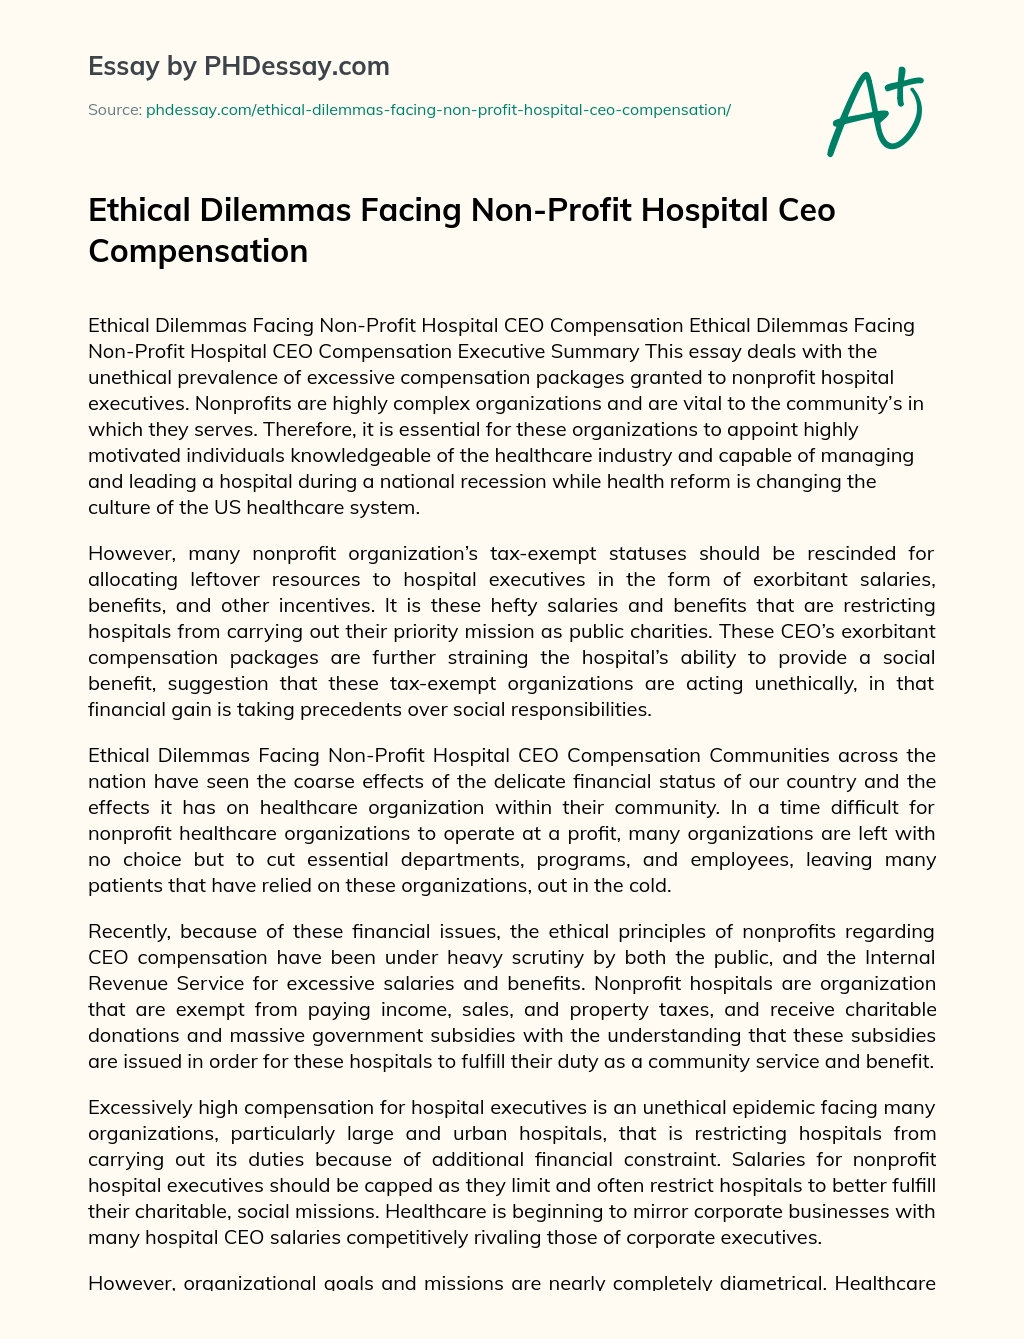 Ethical Dilemmas Facing Non-Profit Hospital CEO Compensation essay